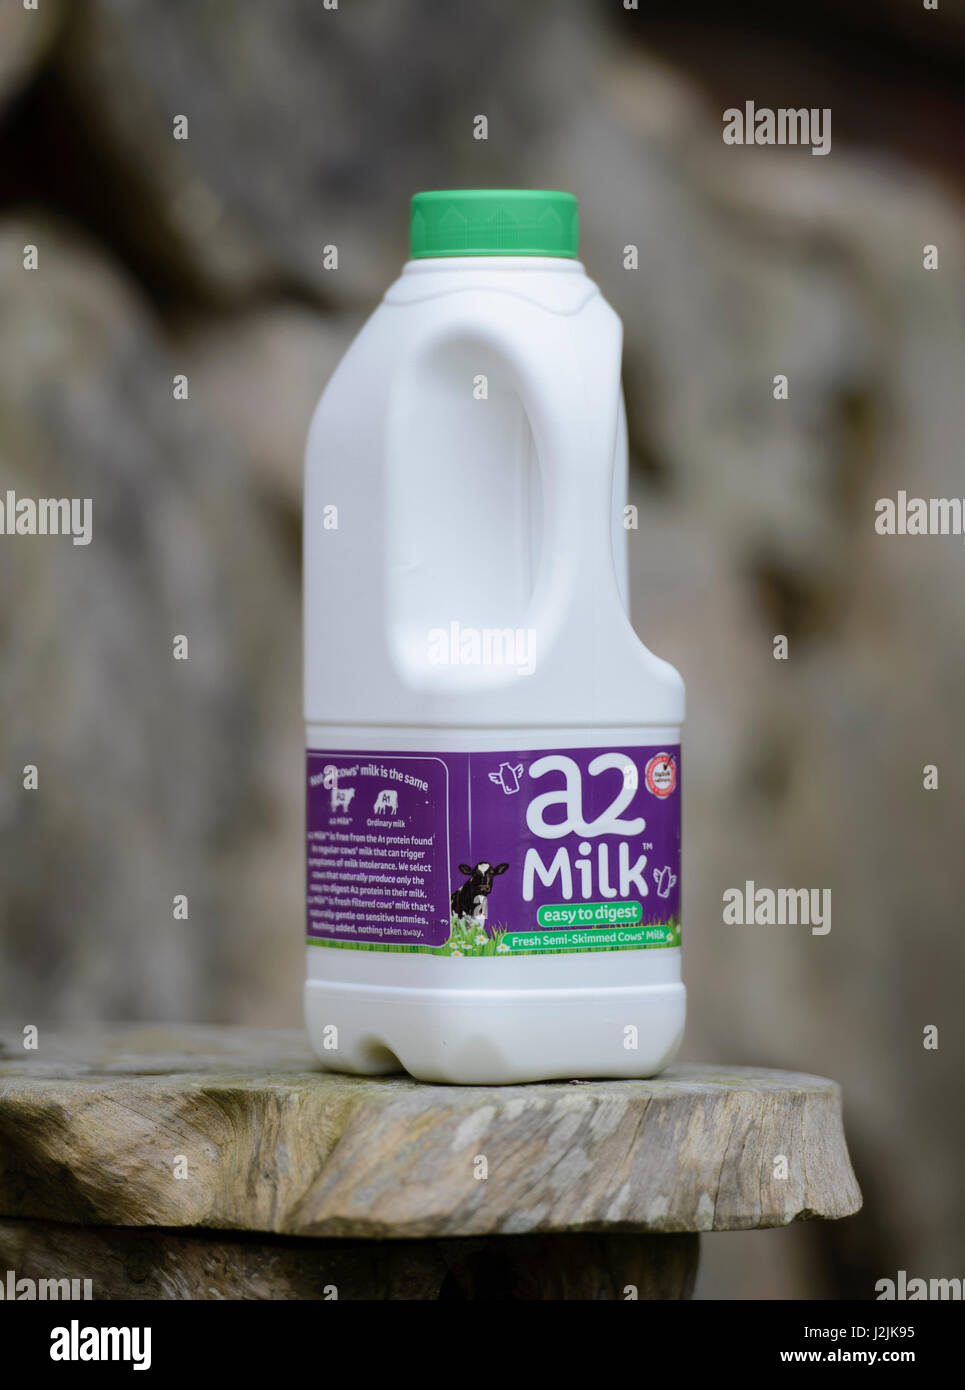 A plastic bottle of a2 milk. Stock Photo